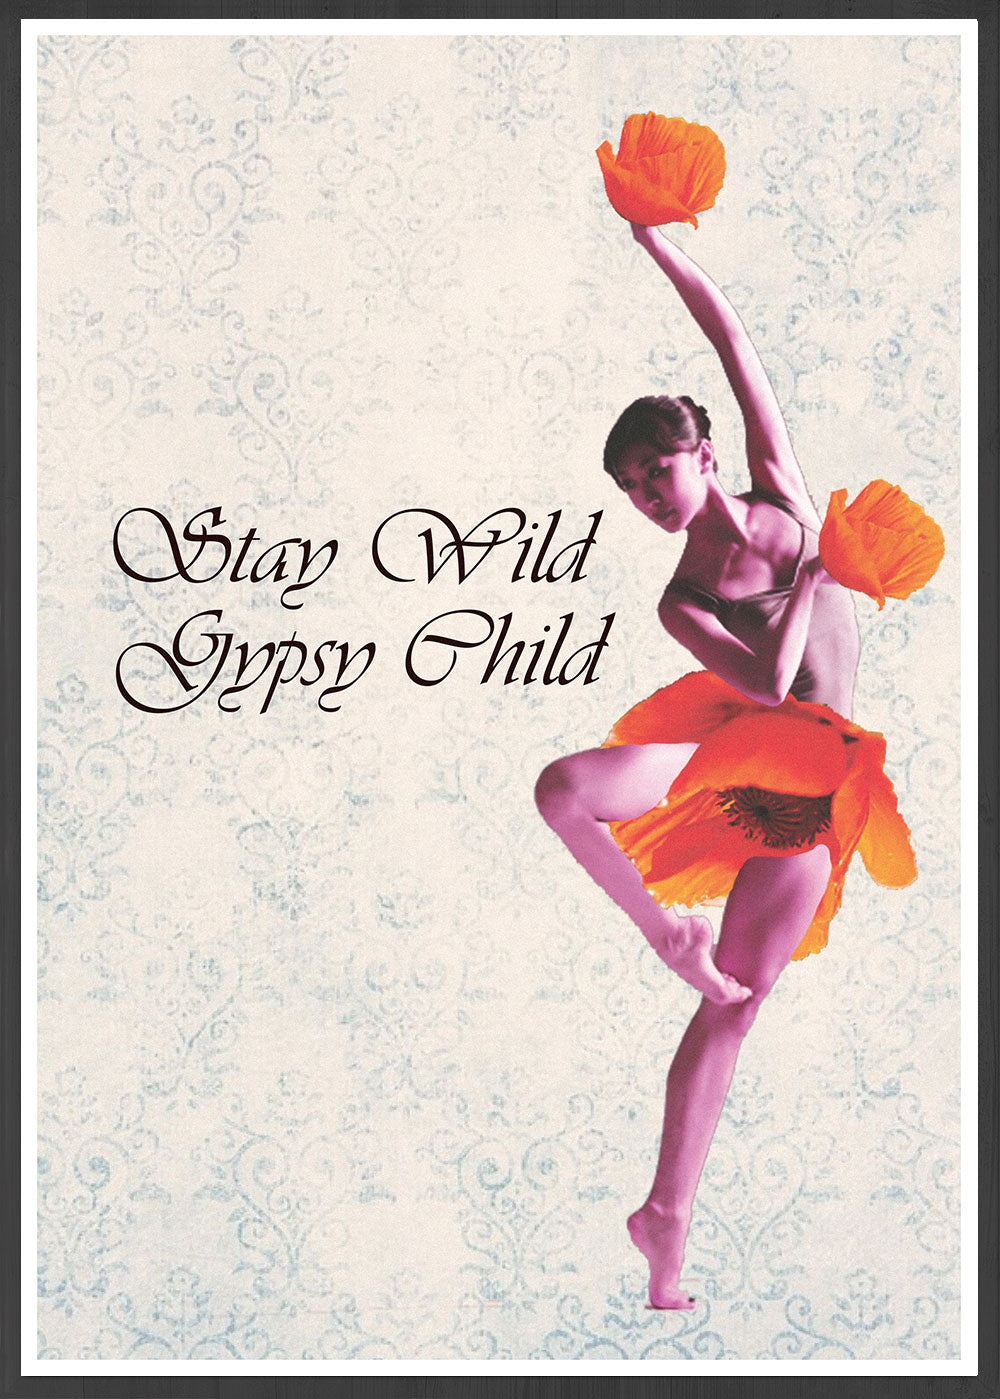 Stay Wild Gypsy Child Child Dancer Art Print in a frame